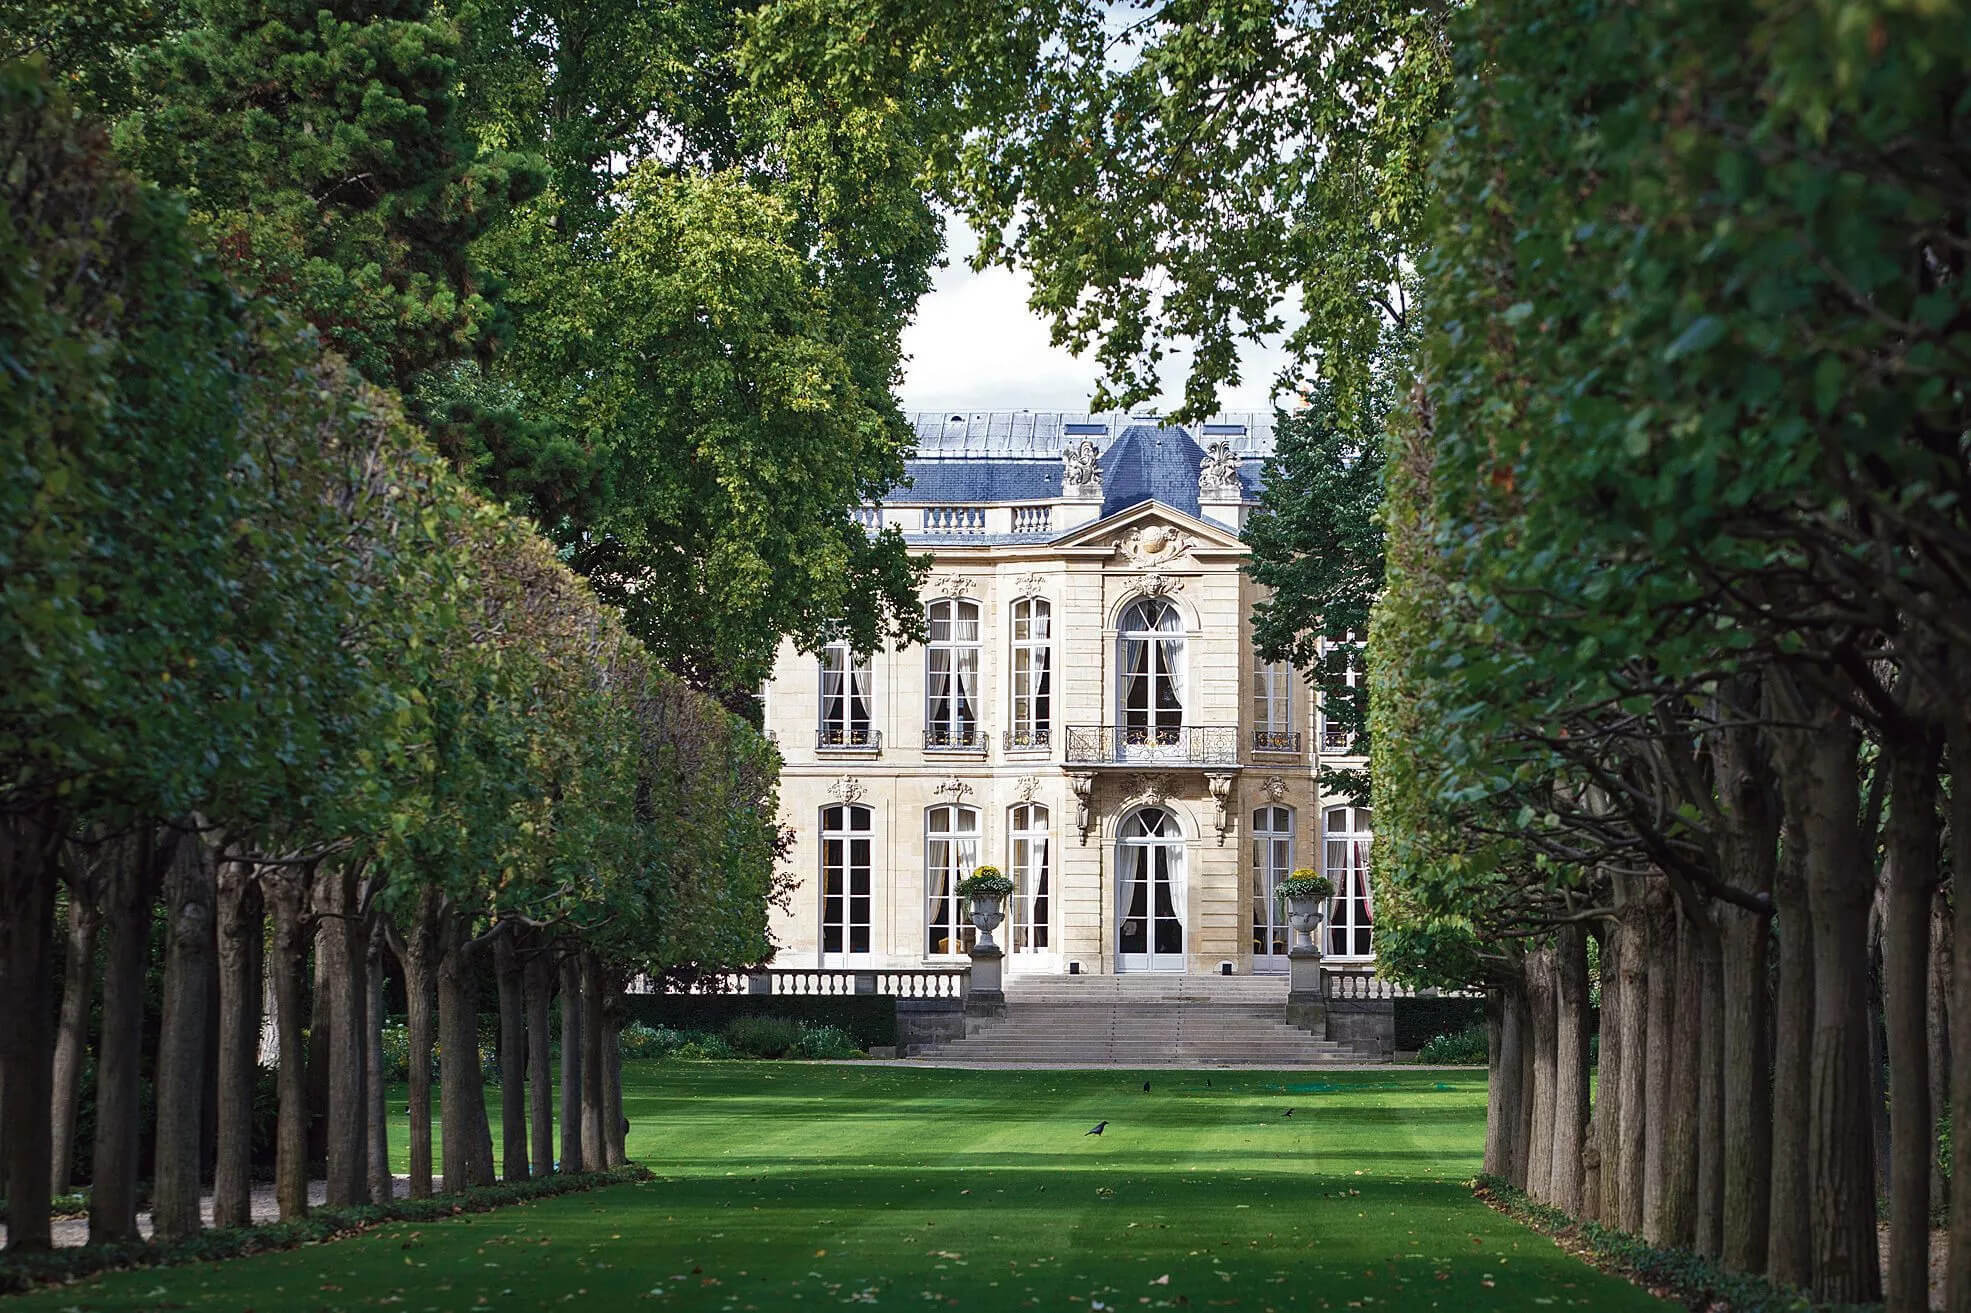 Hôtel Matignon (official residence of the Prime Minister of France) - 57 Rue de Varenne, 75007 Paris